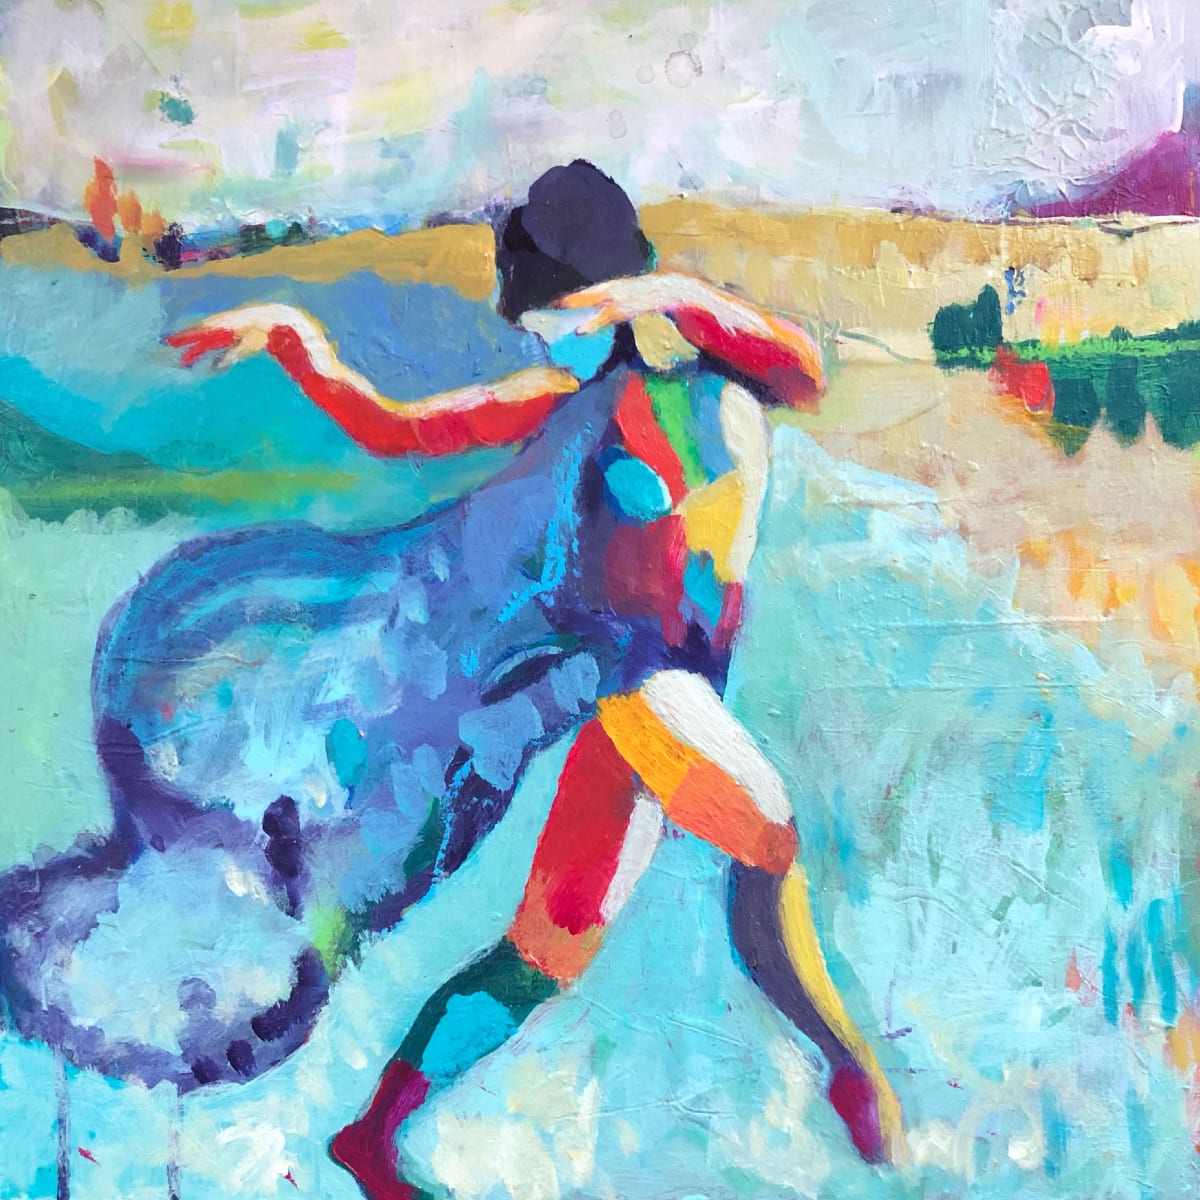 Beach Dancer  Image: "Beach Dancer"
Acrylic on cradled wooden panel